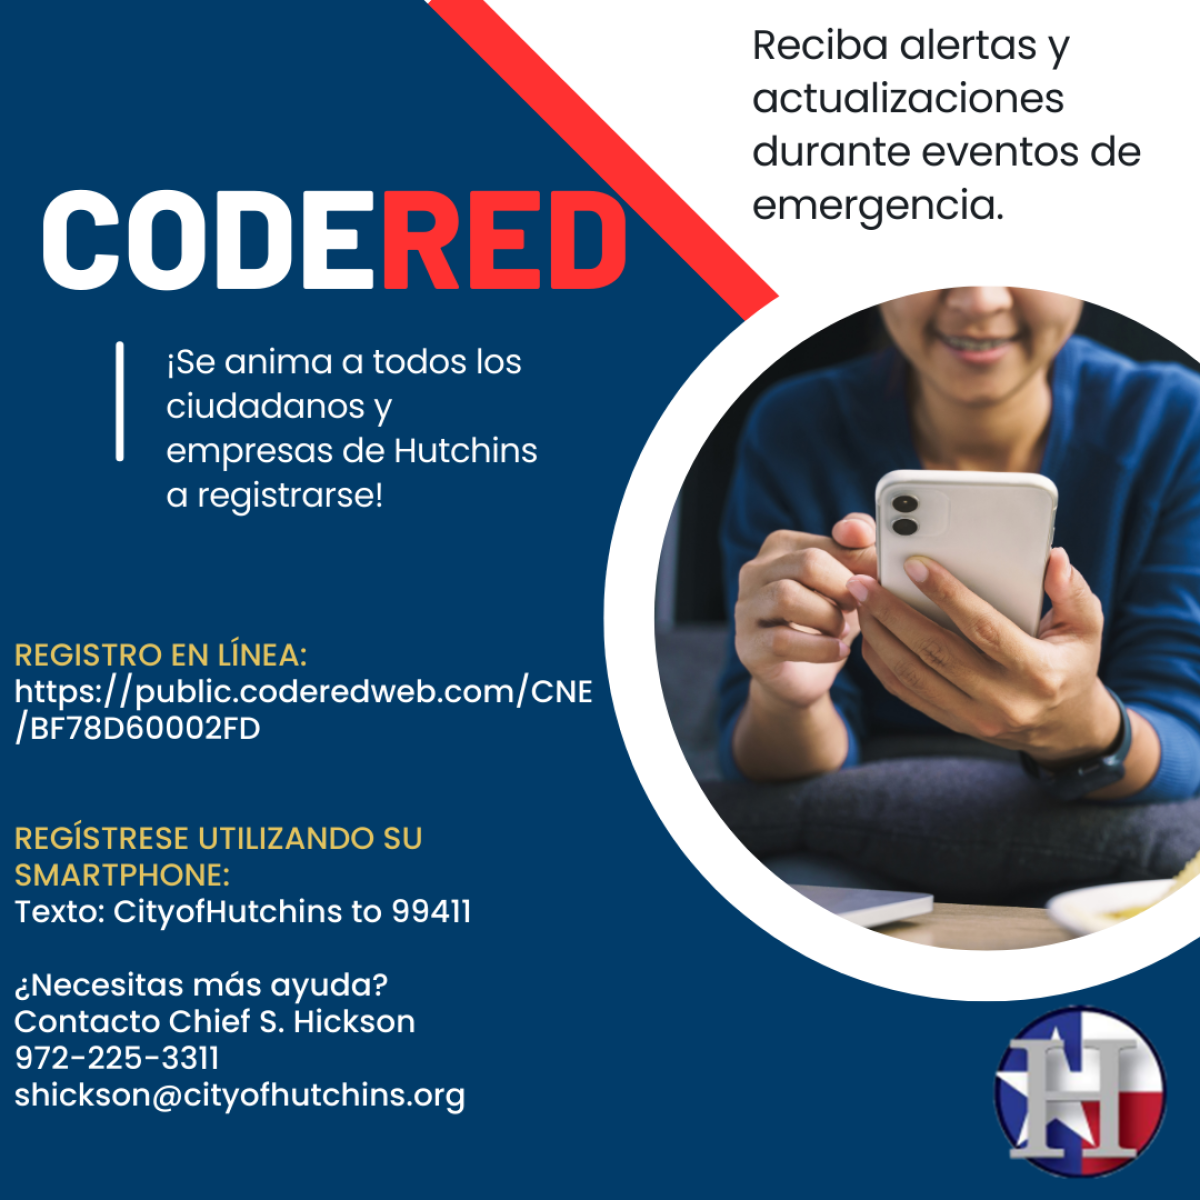 CodeRed flyer in Spanish